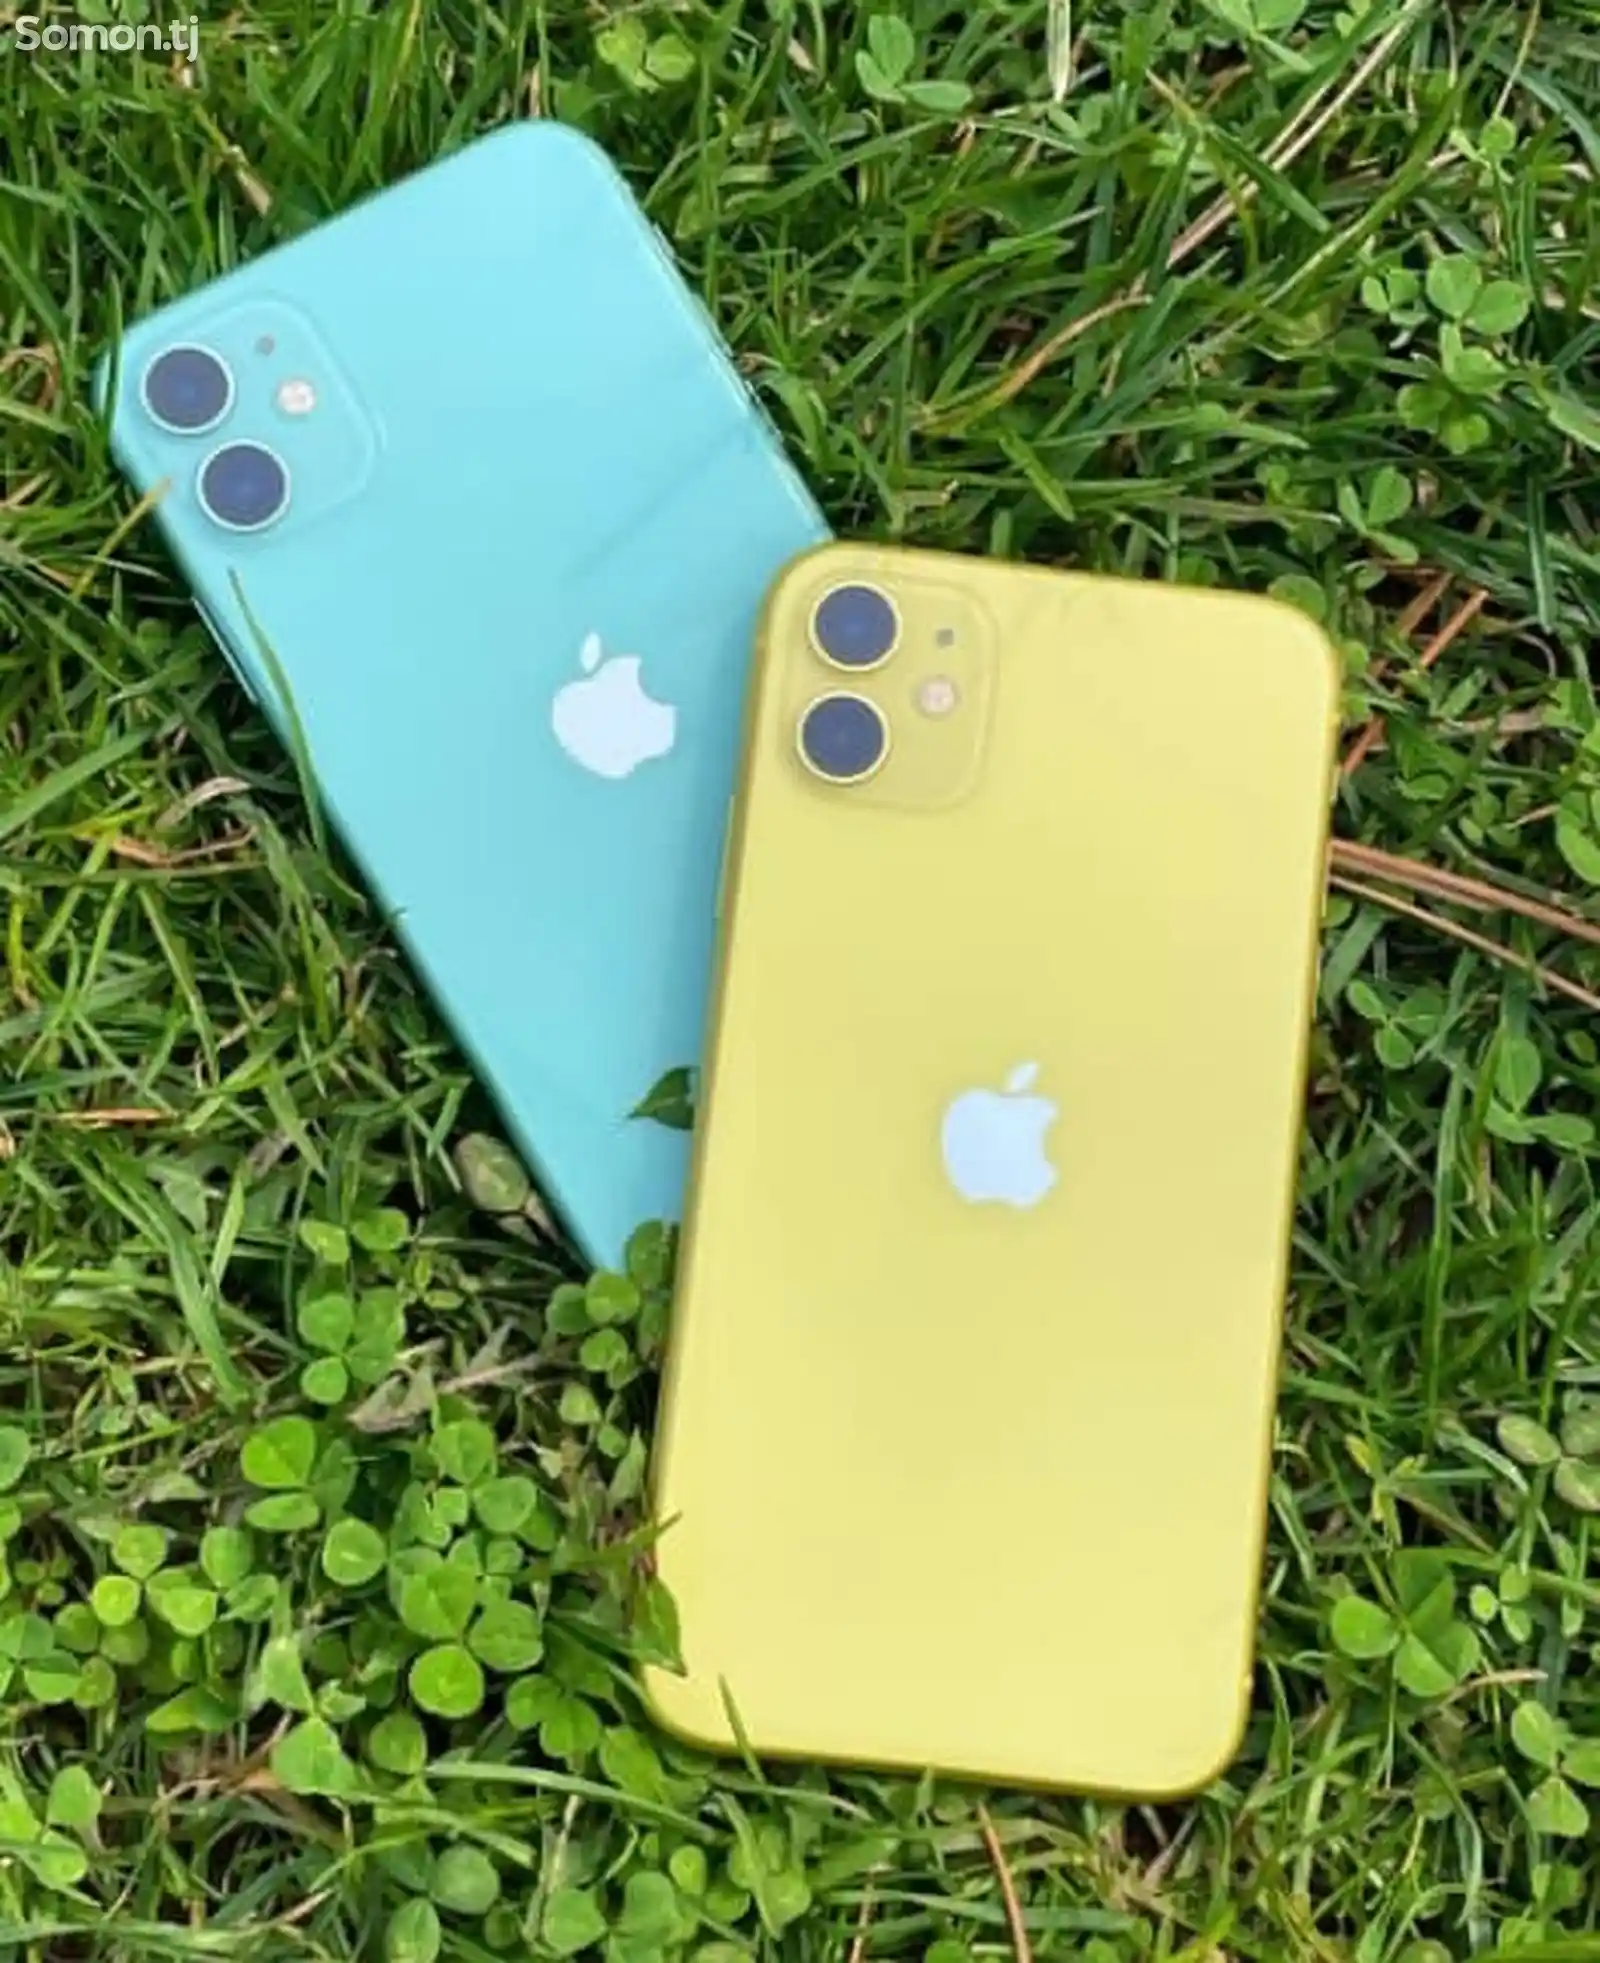 Apple iPhone 11, 128 gb, Yellow-1